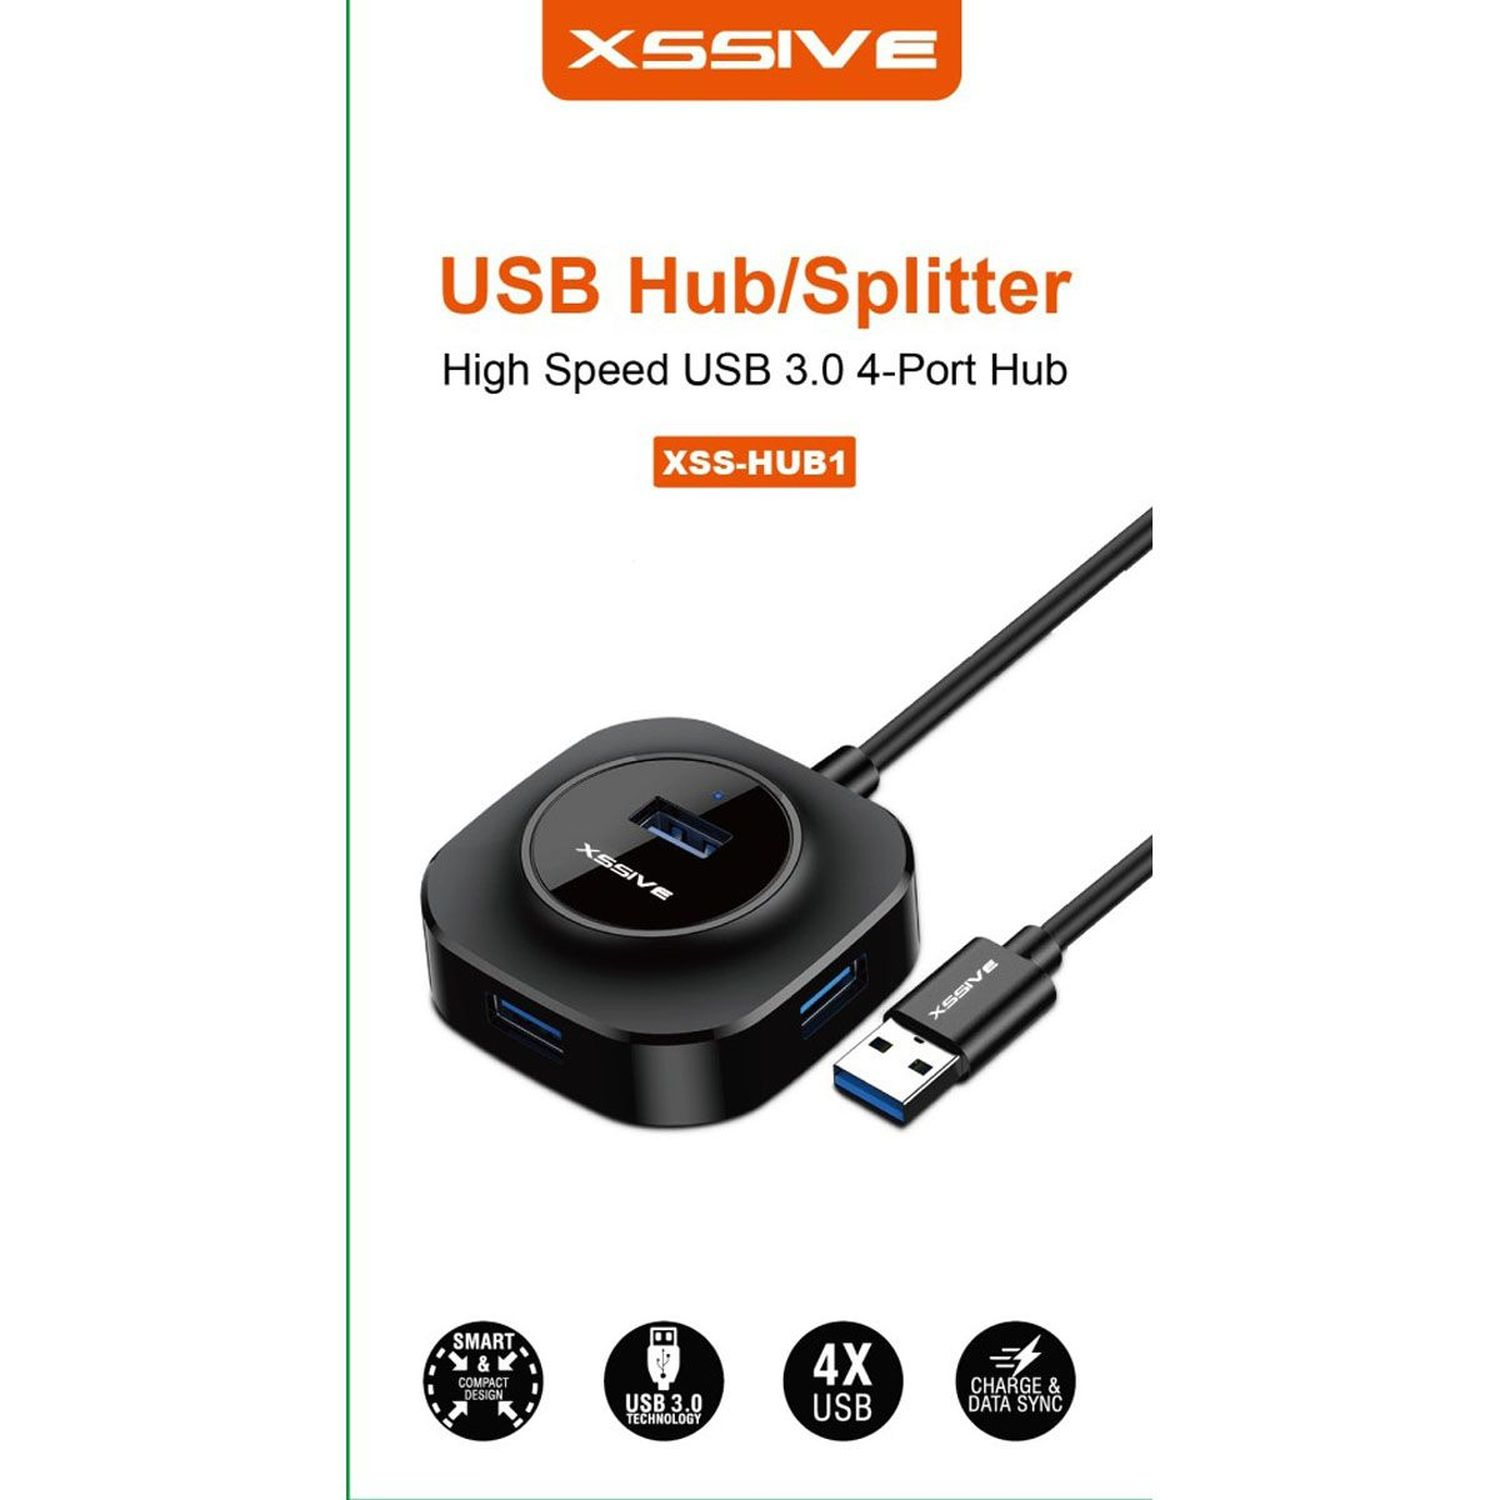 Speed USB Adapter, Schwarz Super Hub, XSSIVE